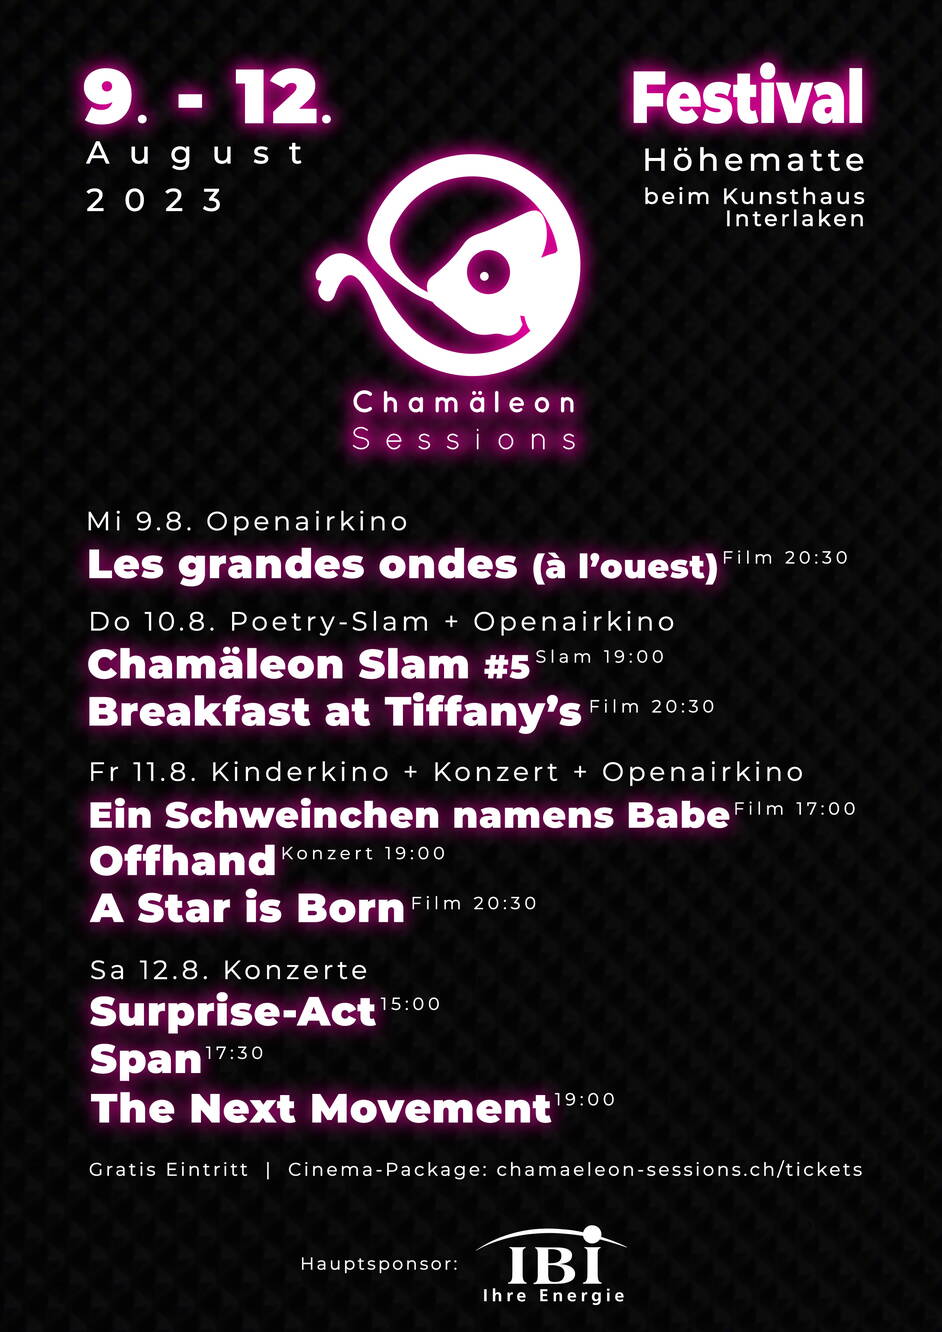 des_chamaeleon-sessions-2023-festival-plakat-ibi-a4-v1.0.jpg